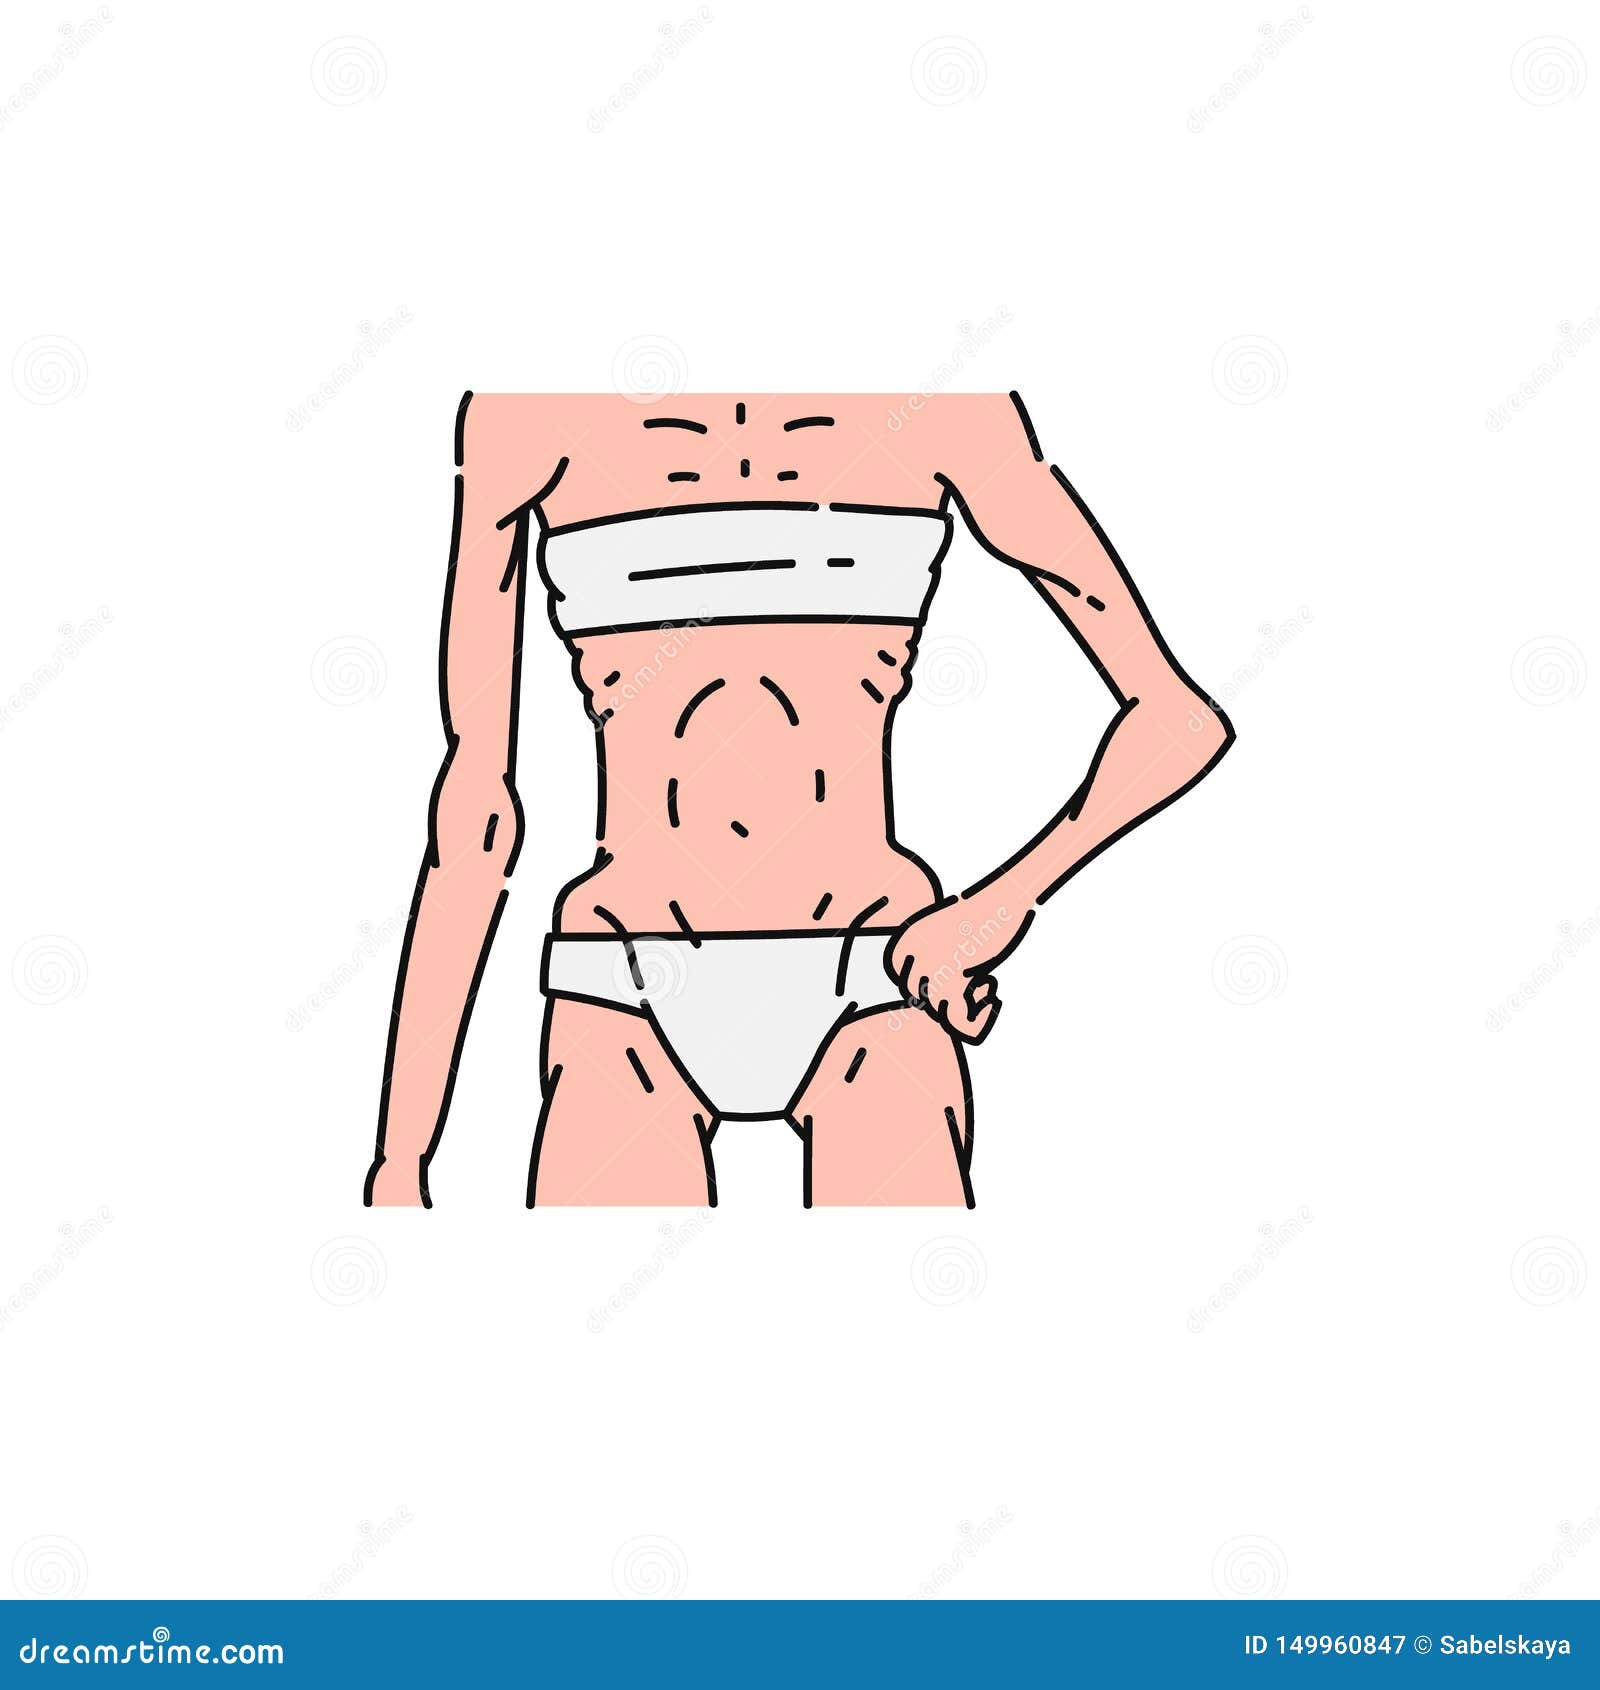 Skinny Anorexic Female Body in Underwear, Bra and Panties, Thin